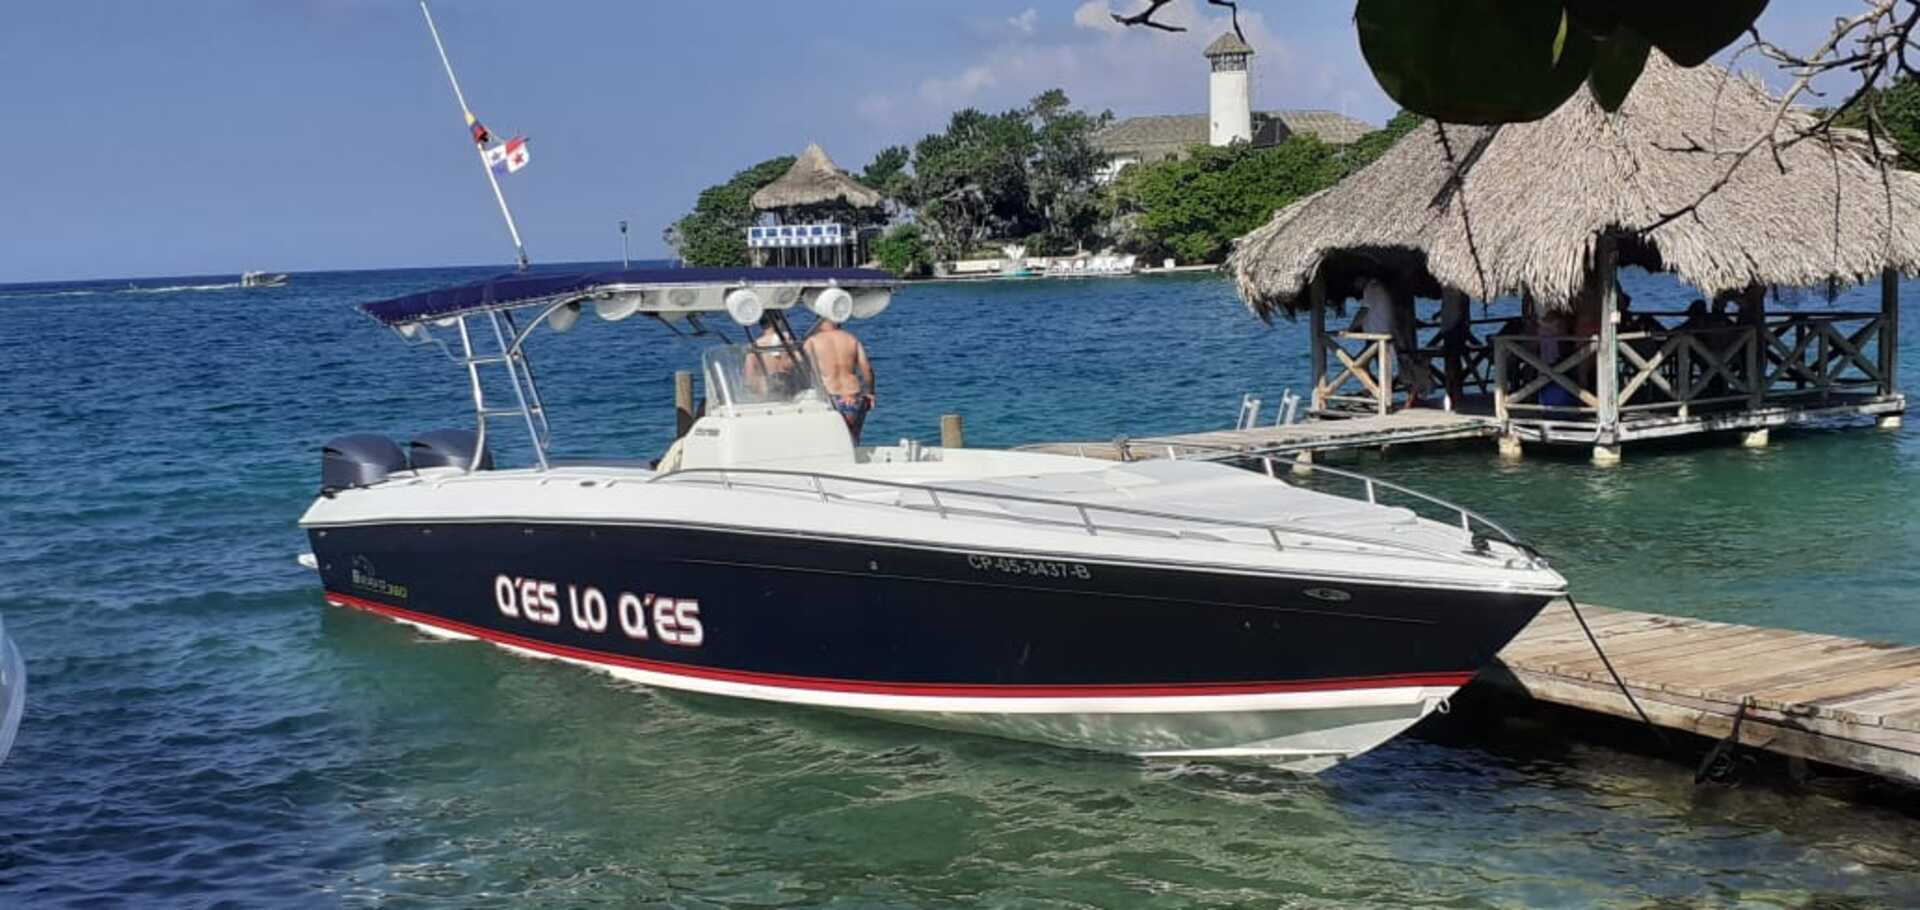 Rosario Islands Private Boat Tour